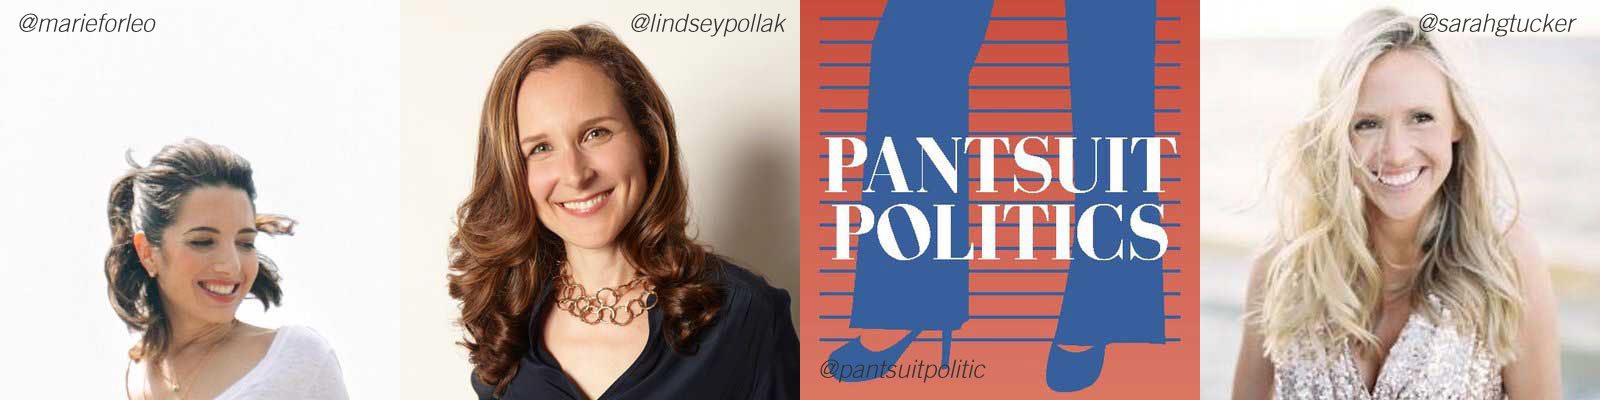 Marie Forleo, Lindsey Pollak, Pantsuit Politics Podcast, Sarah Tucker